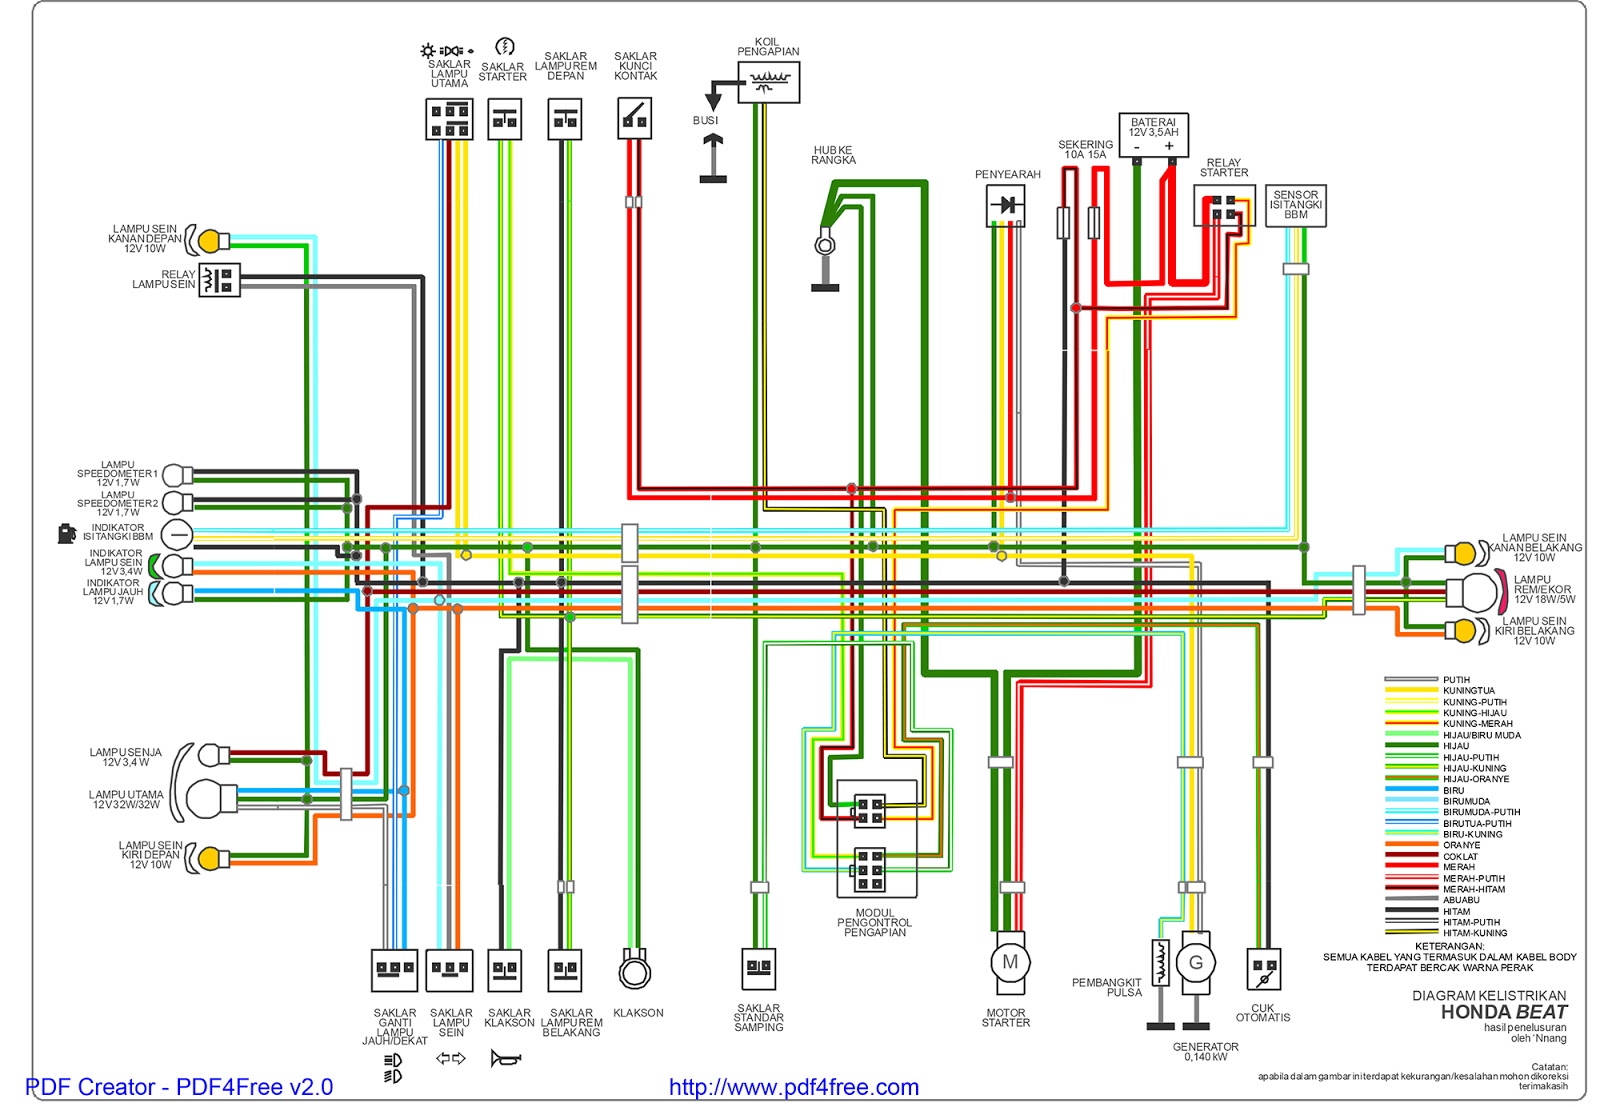 Diagram Wiring Diagram Lampu Utama Full Version Hd Quality Lampu Utama Mybodydiagramv Annameacci It